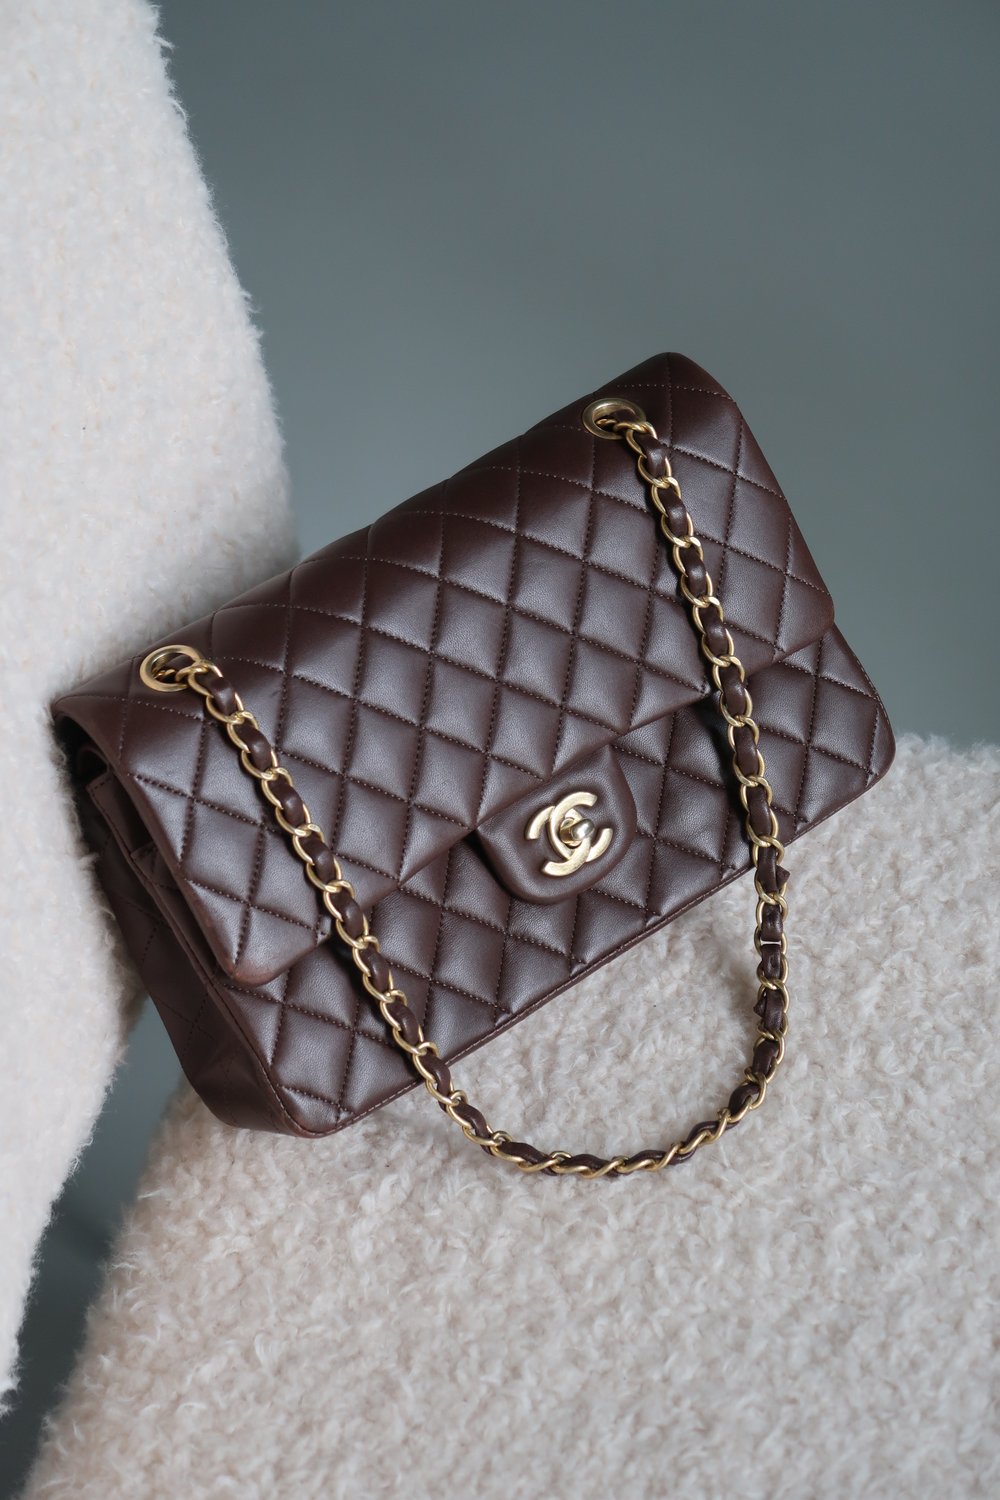 Chanel - Chanel 19 Flap Bag - Maxi - Beige Lambskin - Mixed Hardware - Pre  Loved